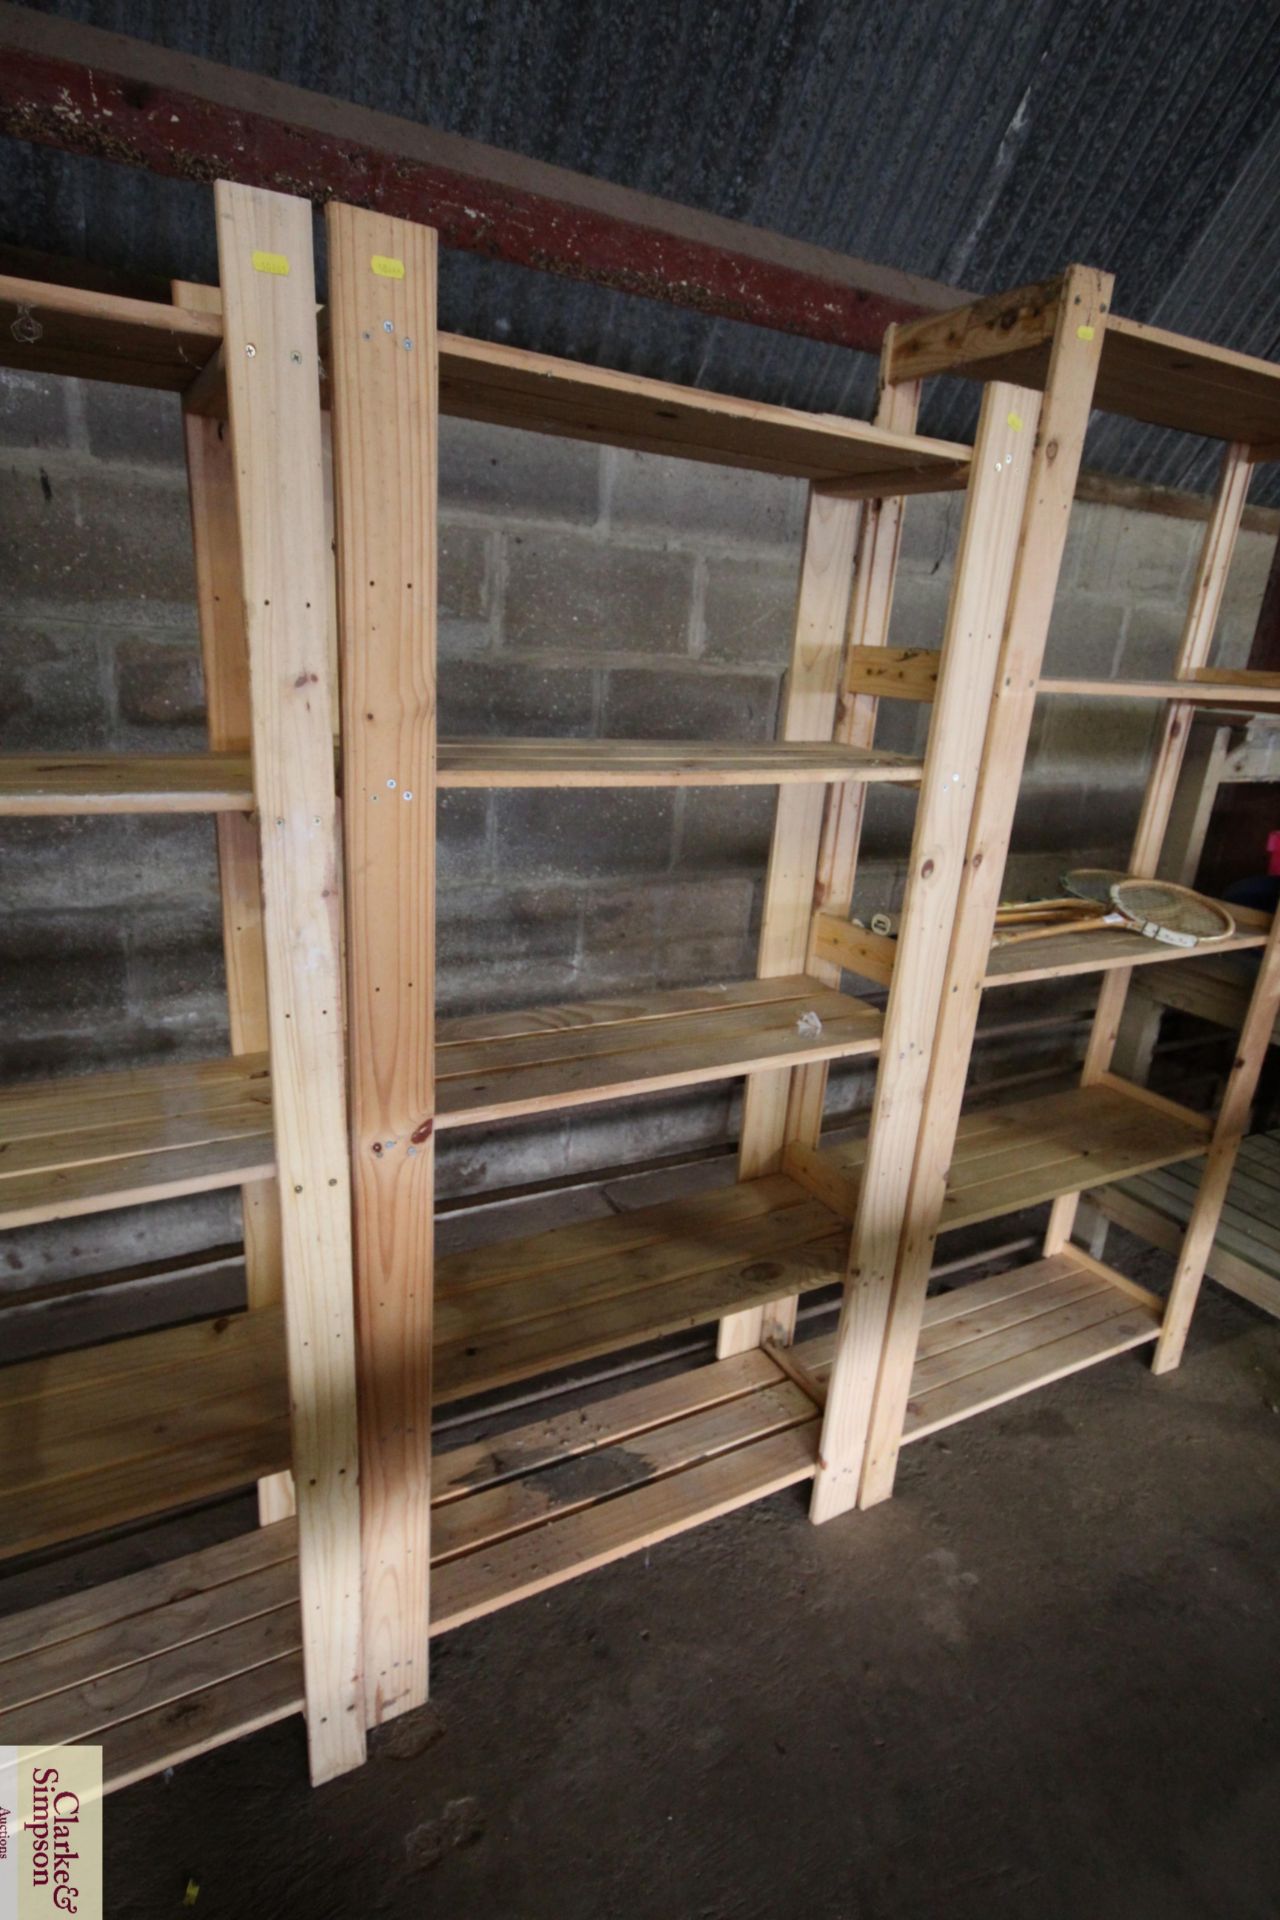 A five tier wooden shelving unit